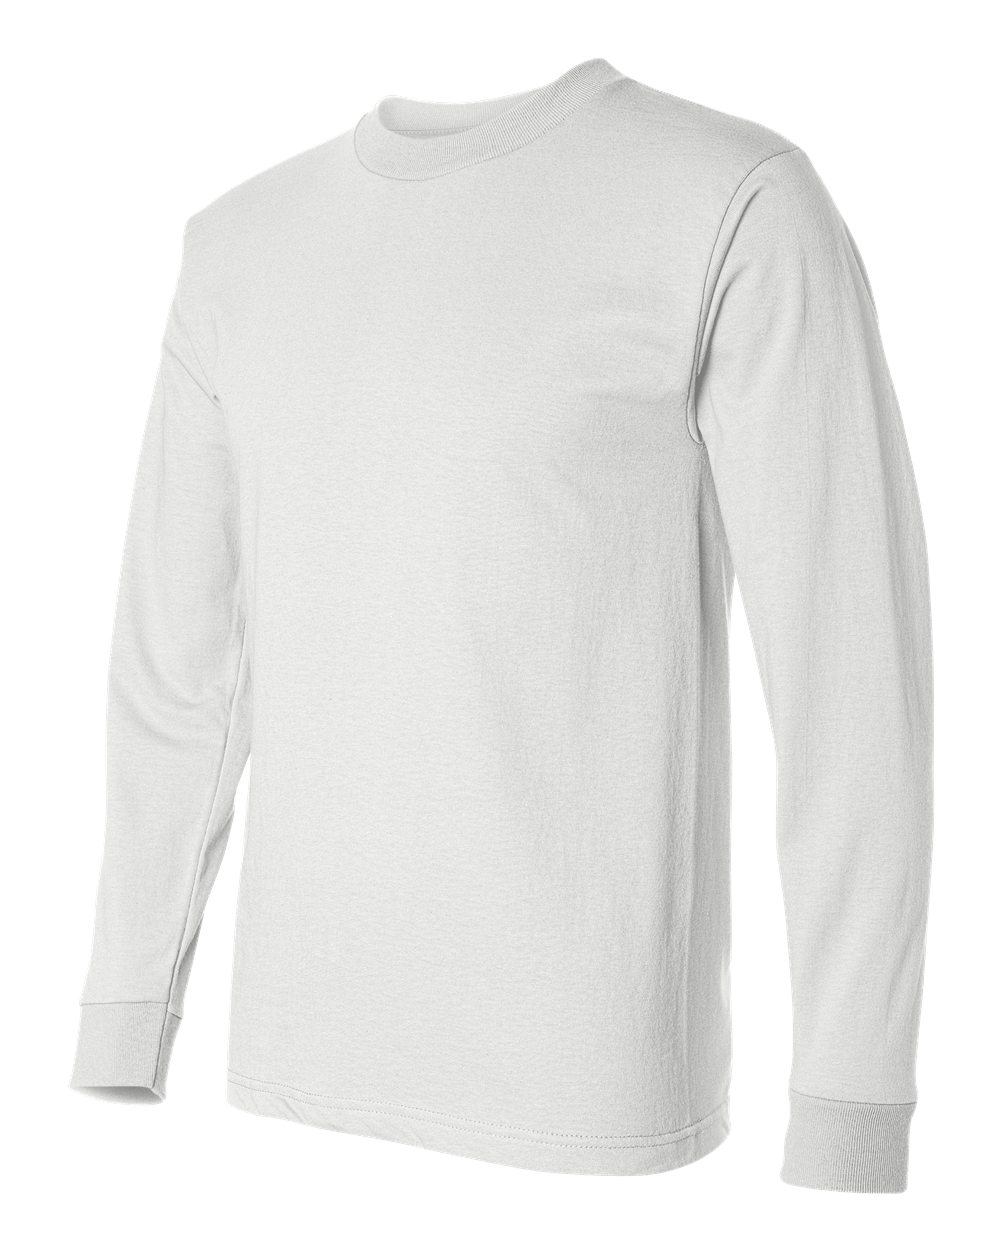 Bayside 2955 Union Made Long Sleeve T-Shirt